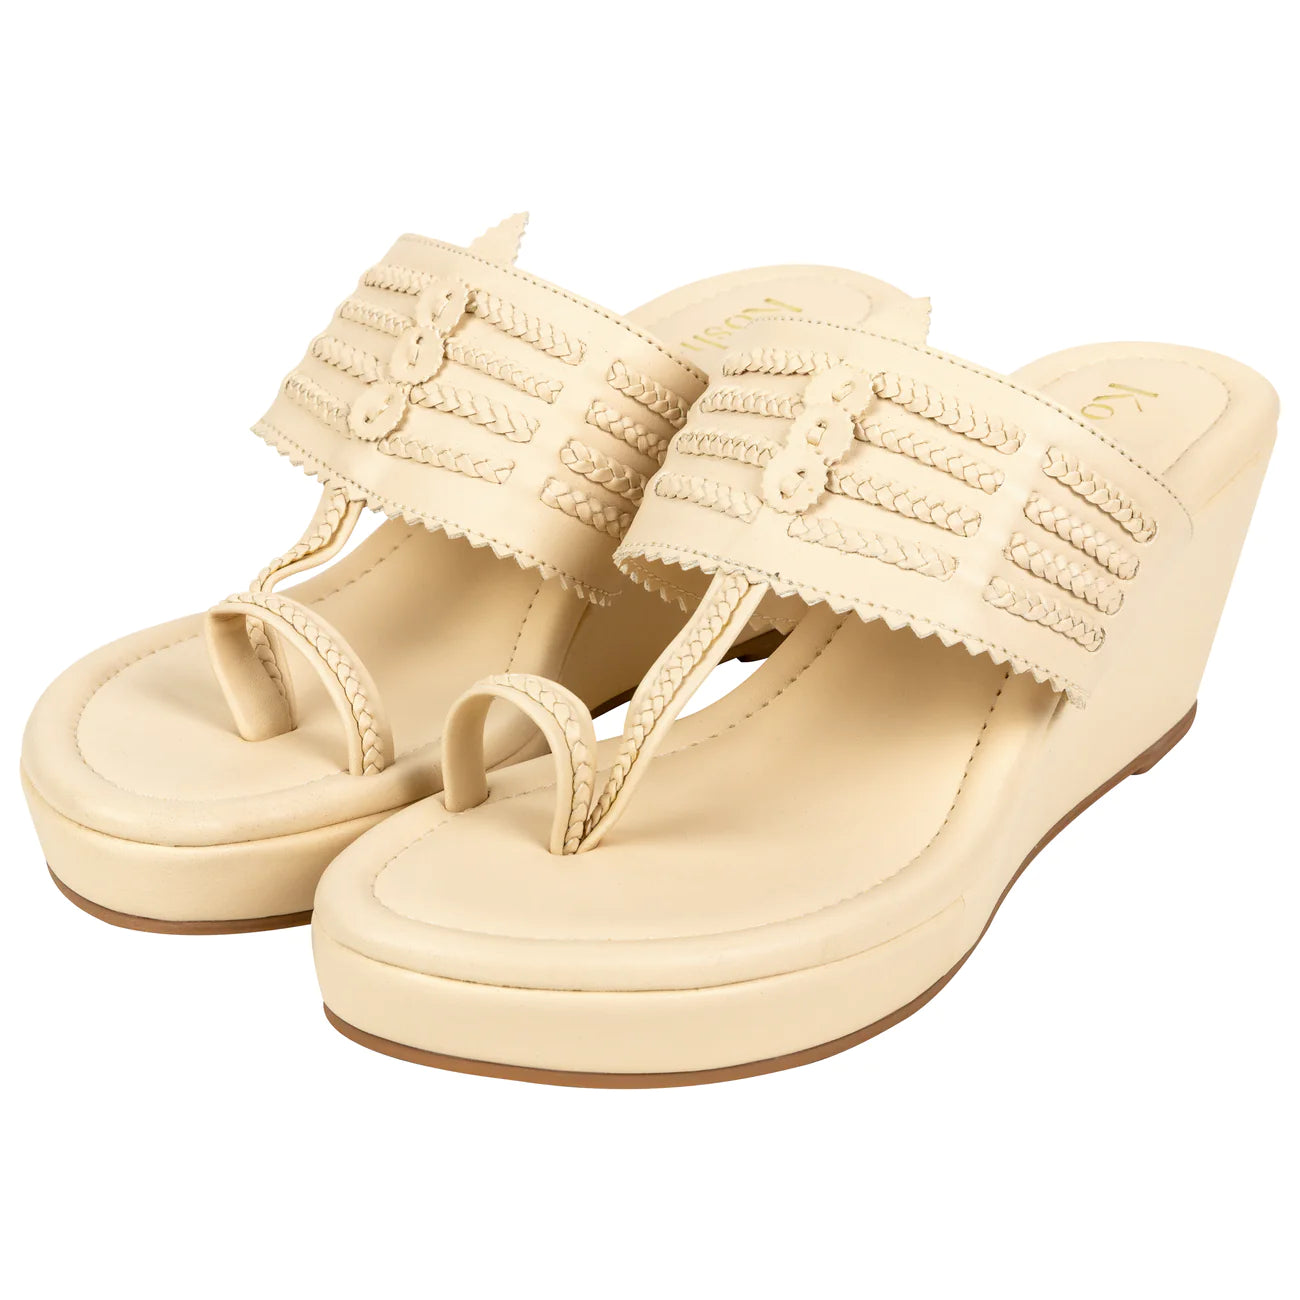 Cream Wedge Sandals For Women